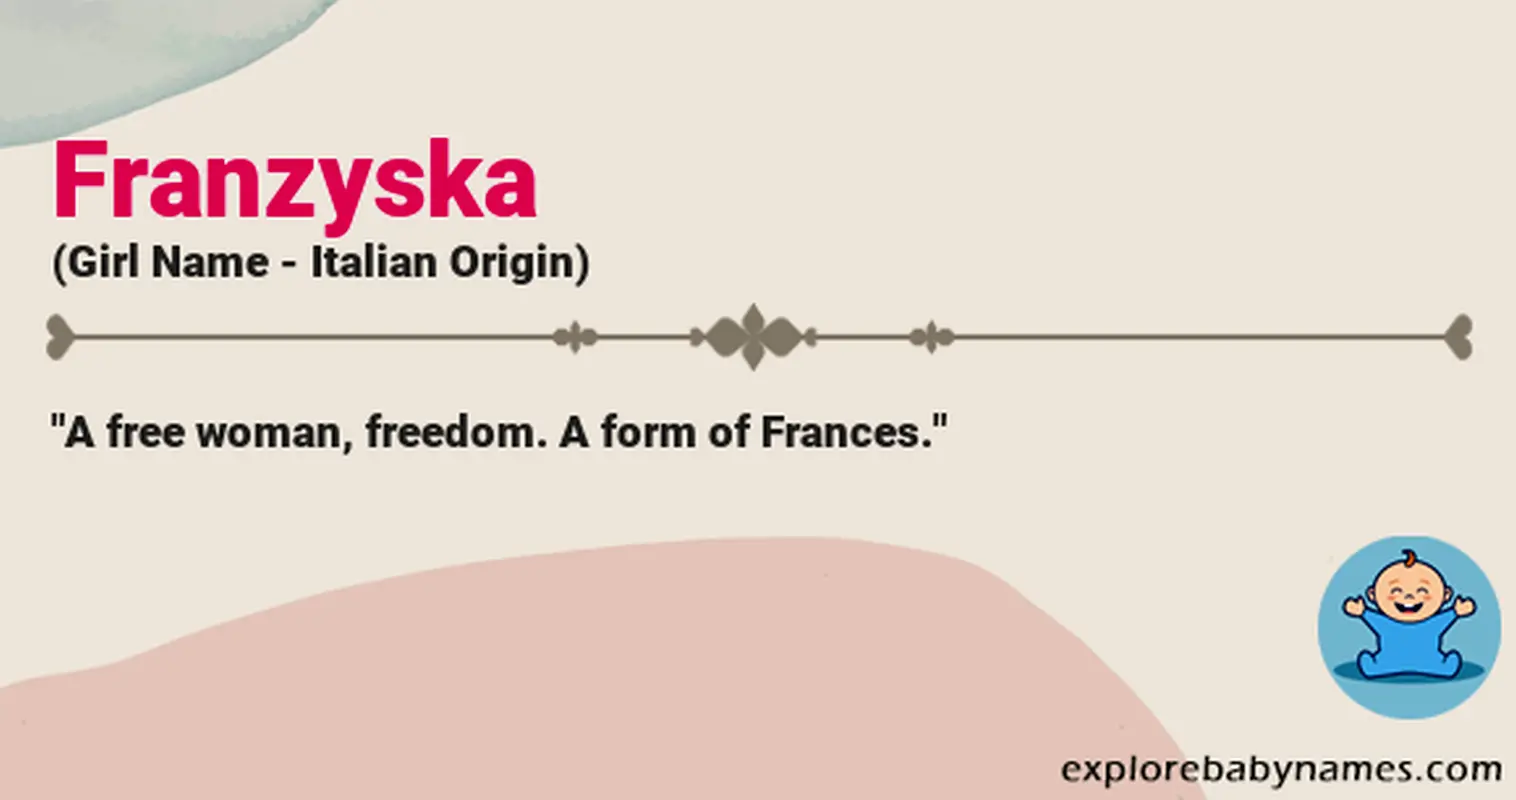 Meaning of Franzyska